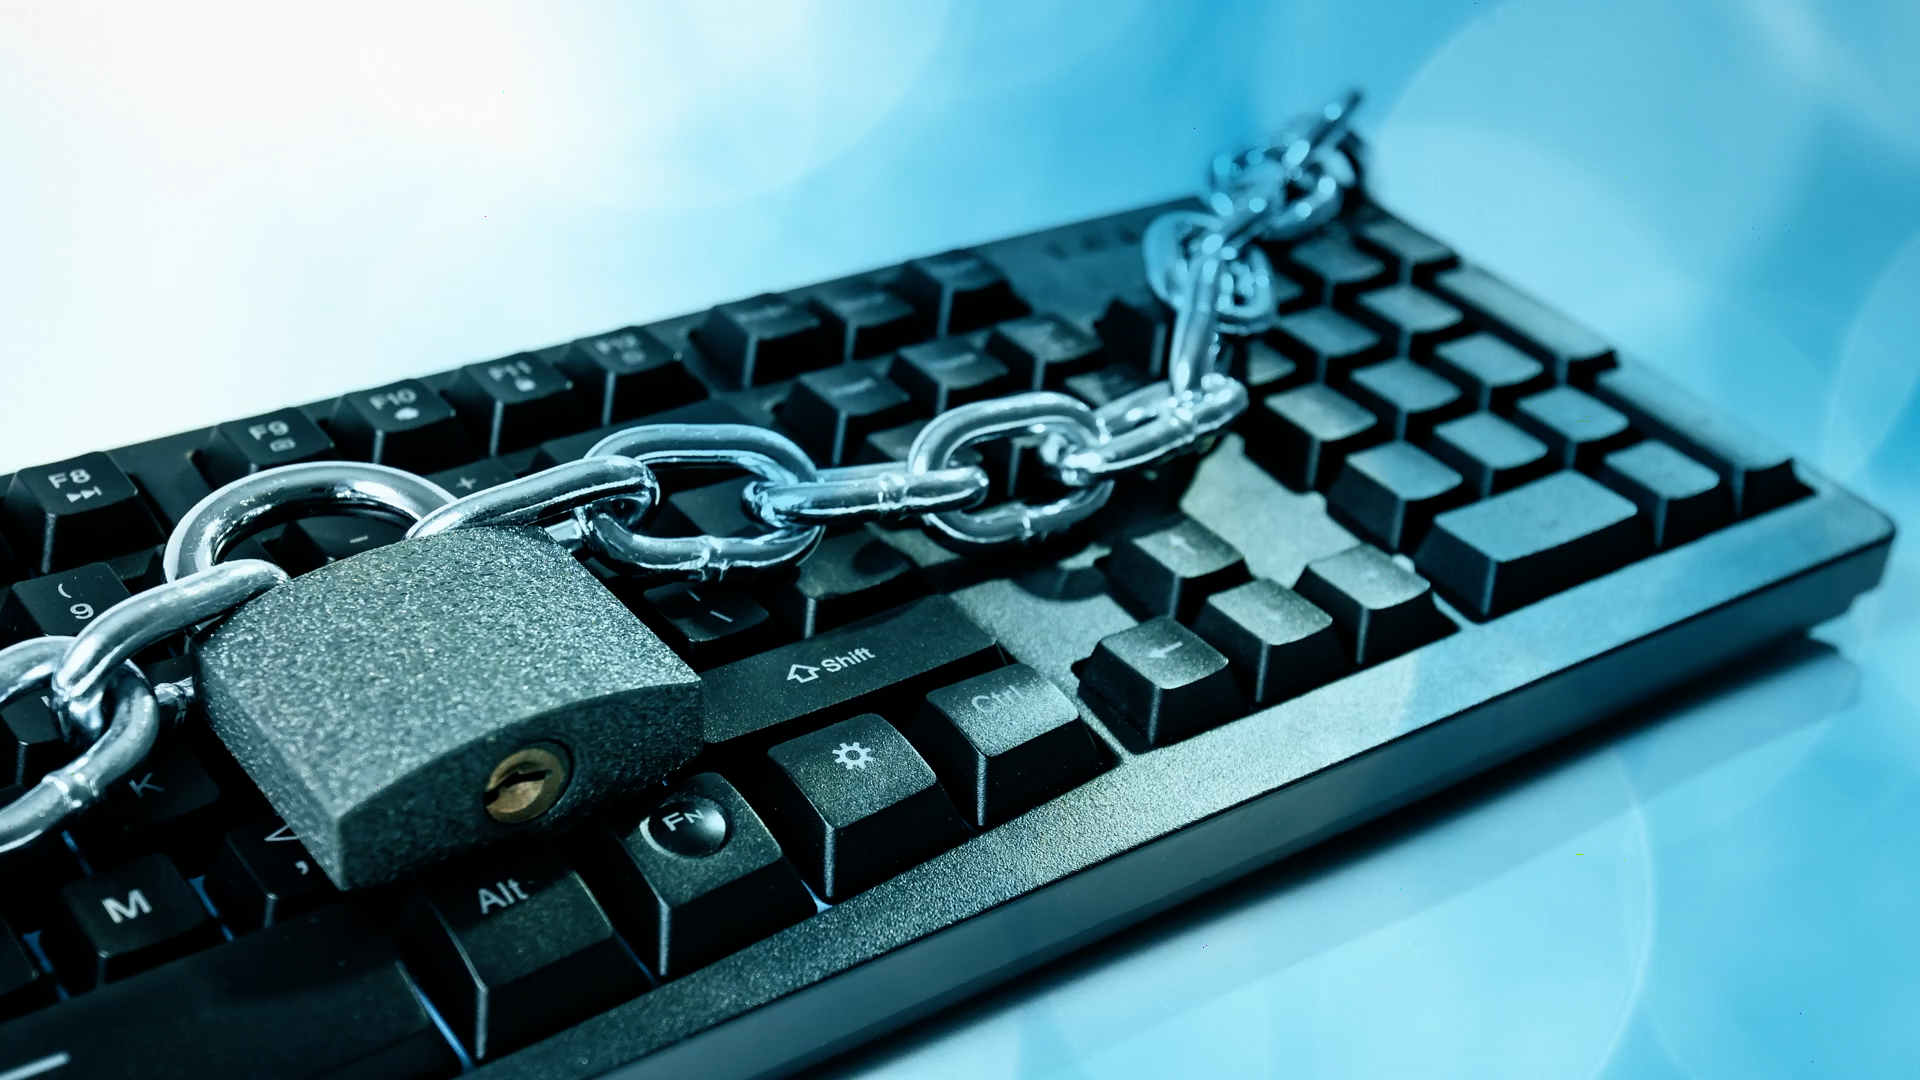 Ransomware of gijzelsoftware blijft populair onder cybercriminelen.